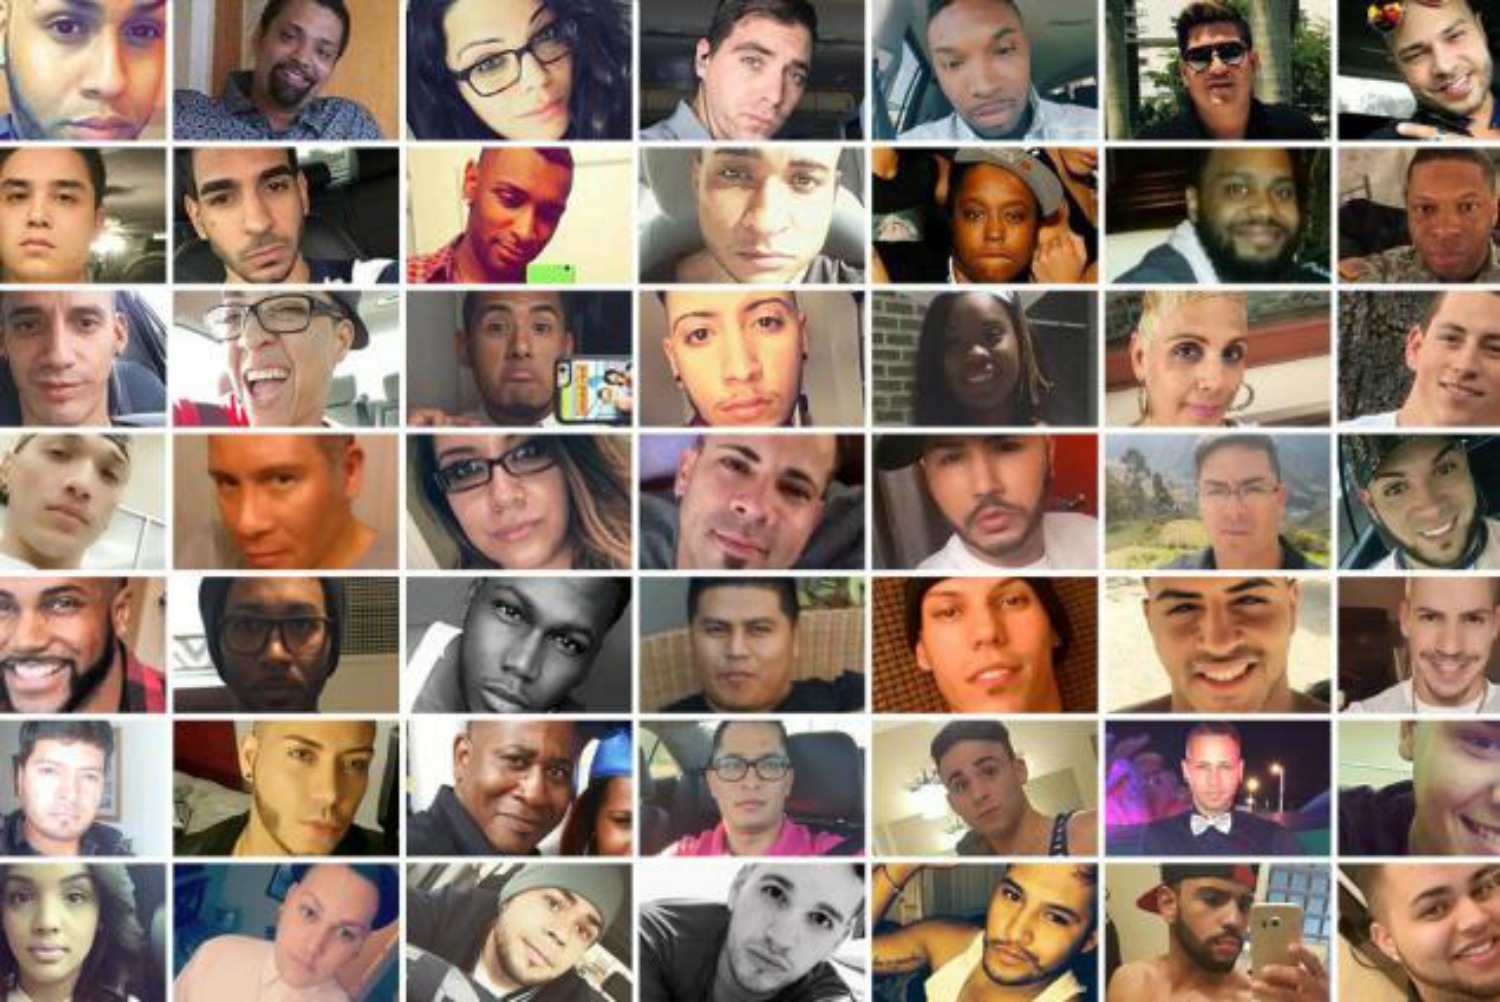 Orlando victims